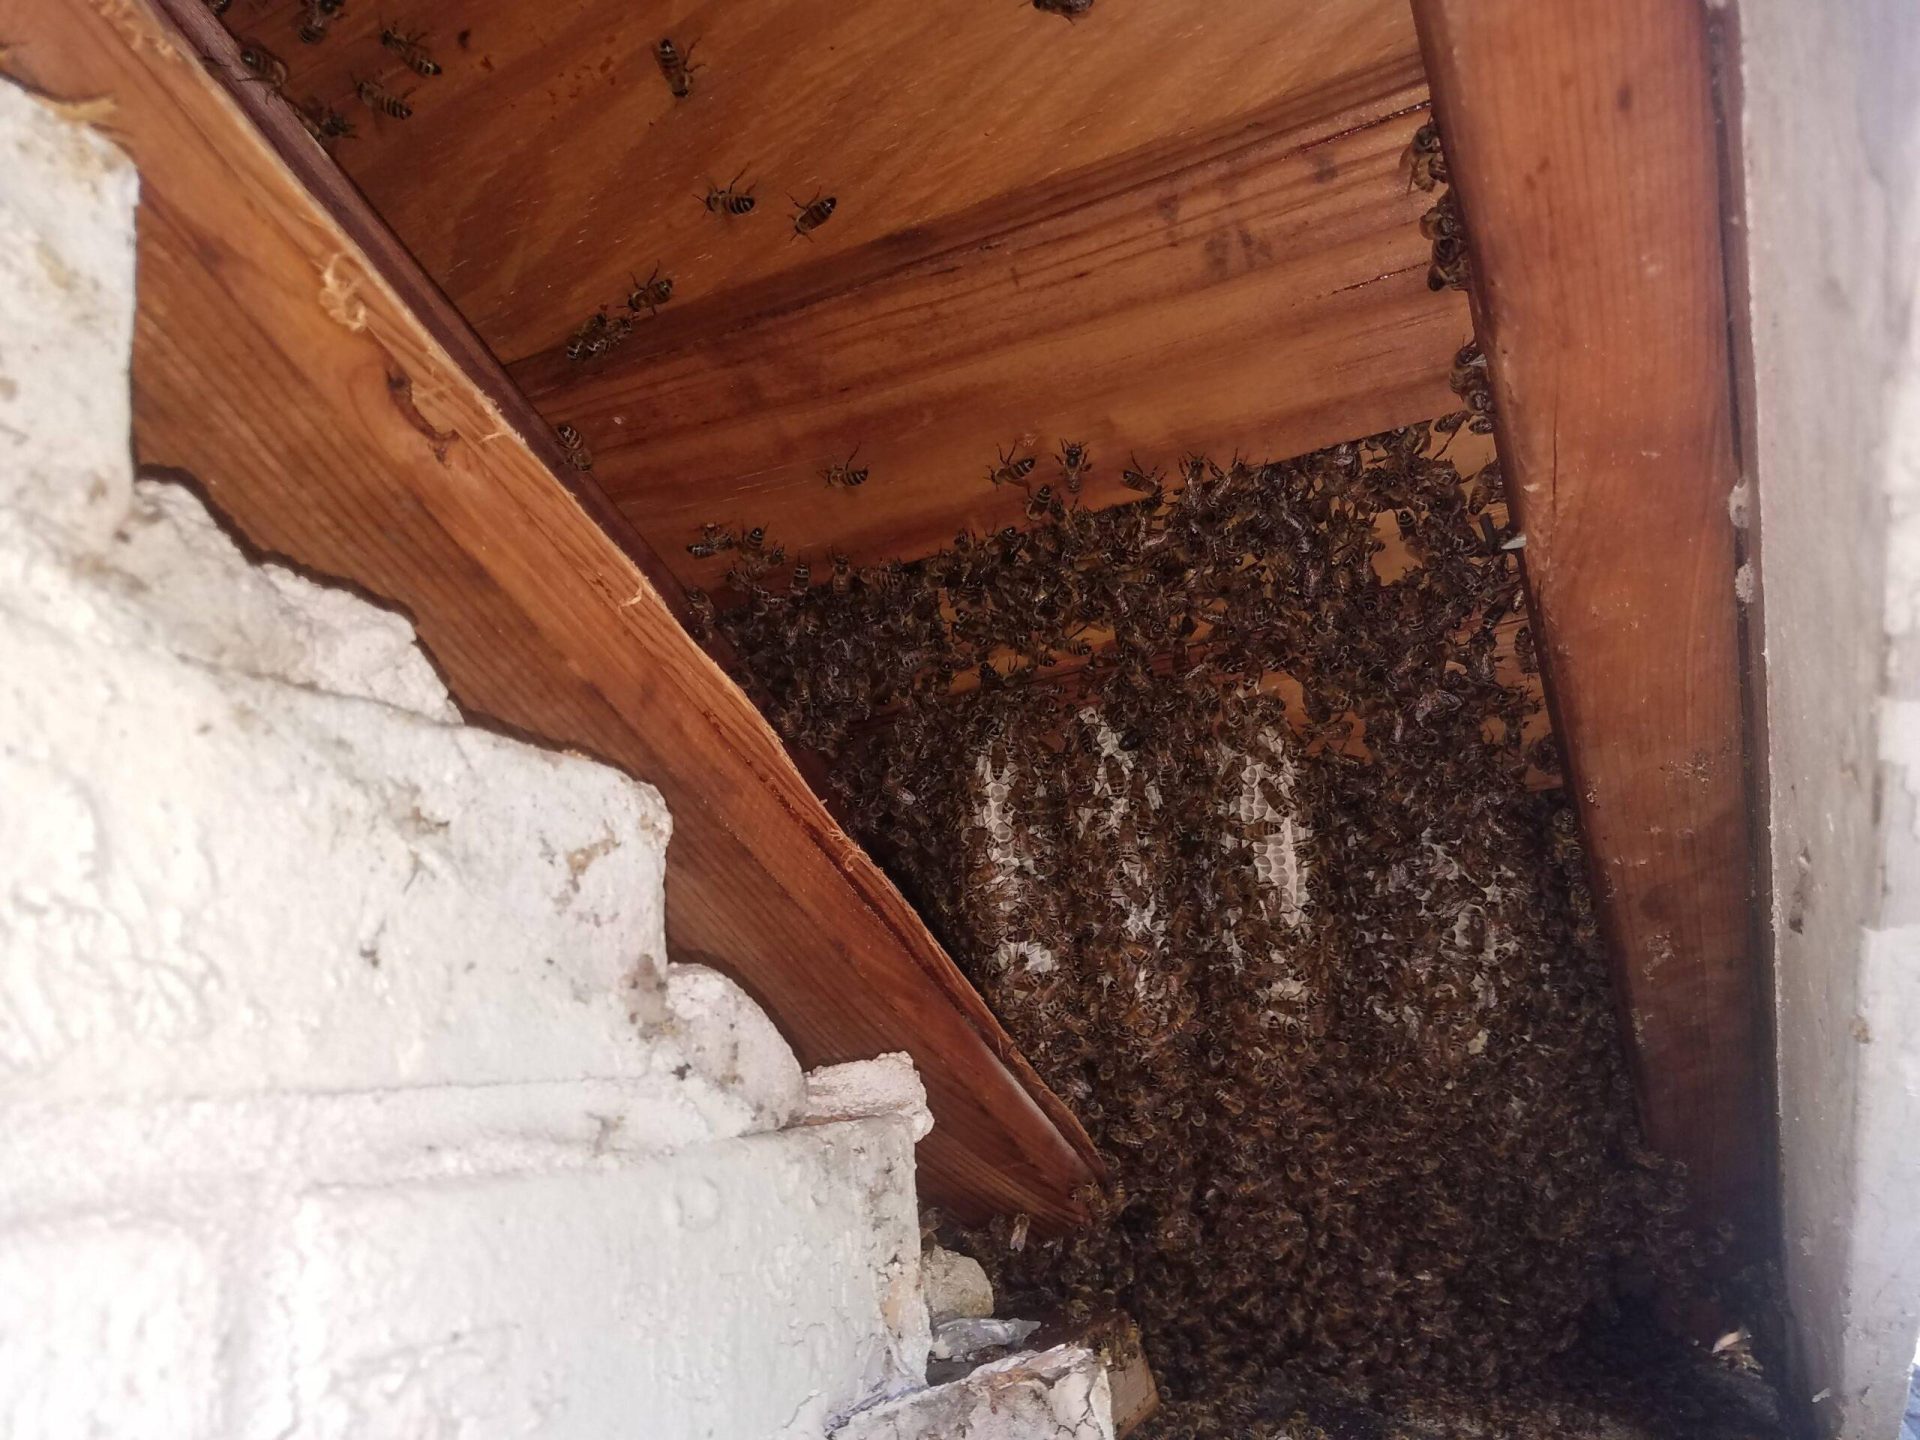 removing a wasp nest Sugar Land, TX 